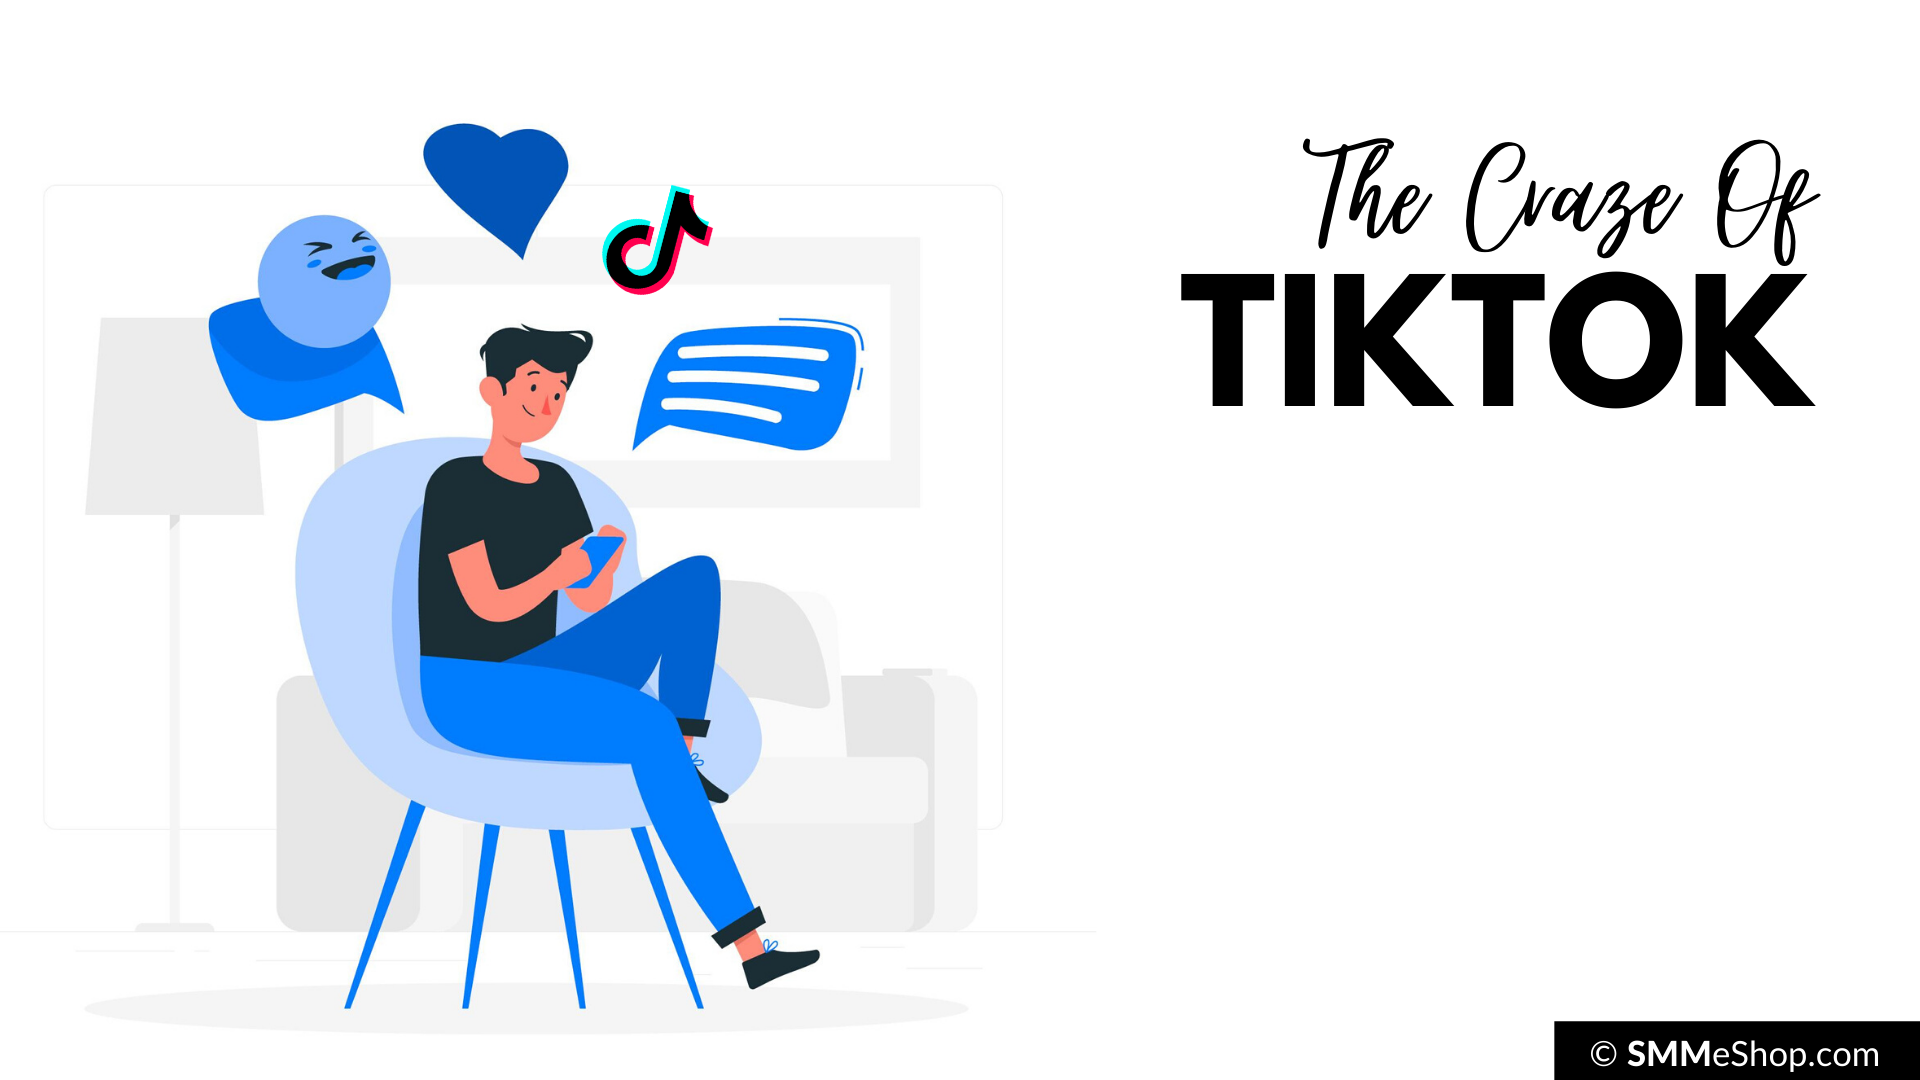 The Craze of TikTok